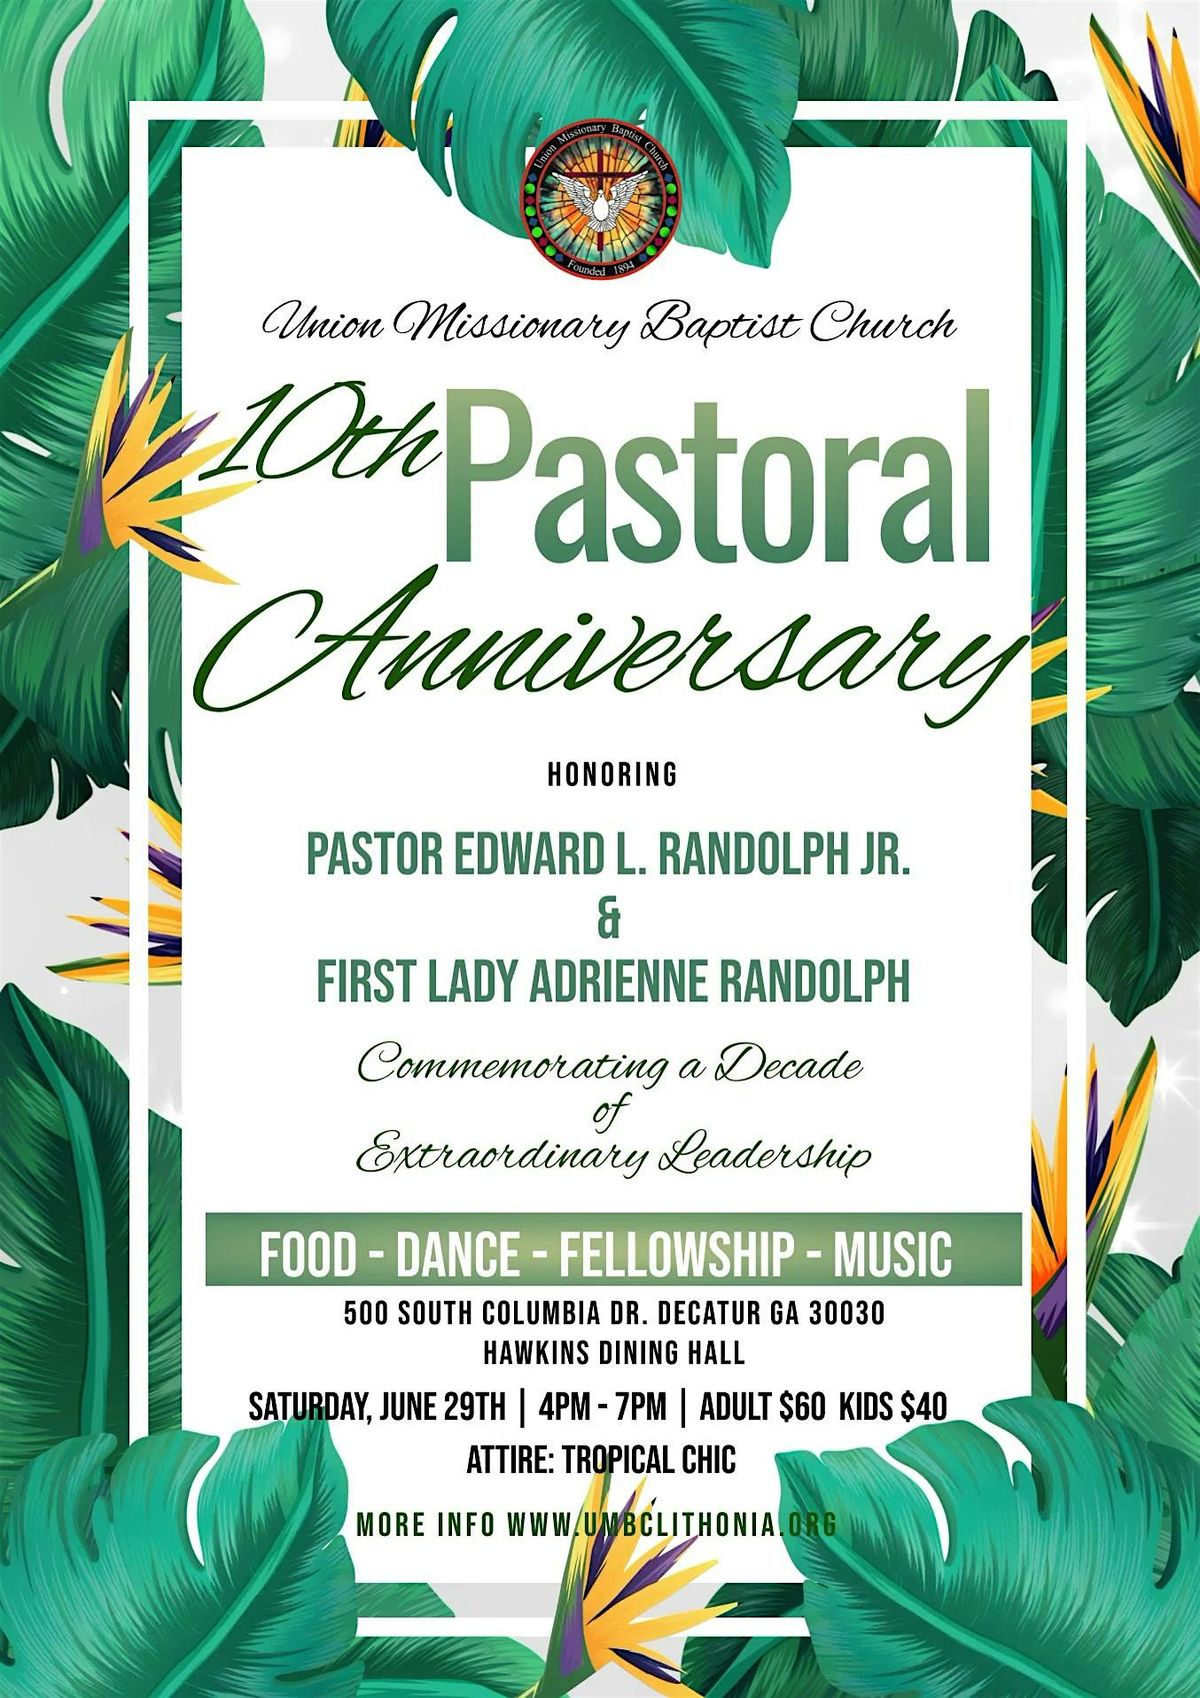 Union Missionary Baptist Church 10th Pastoral Anniversary Celebration